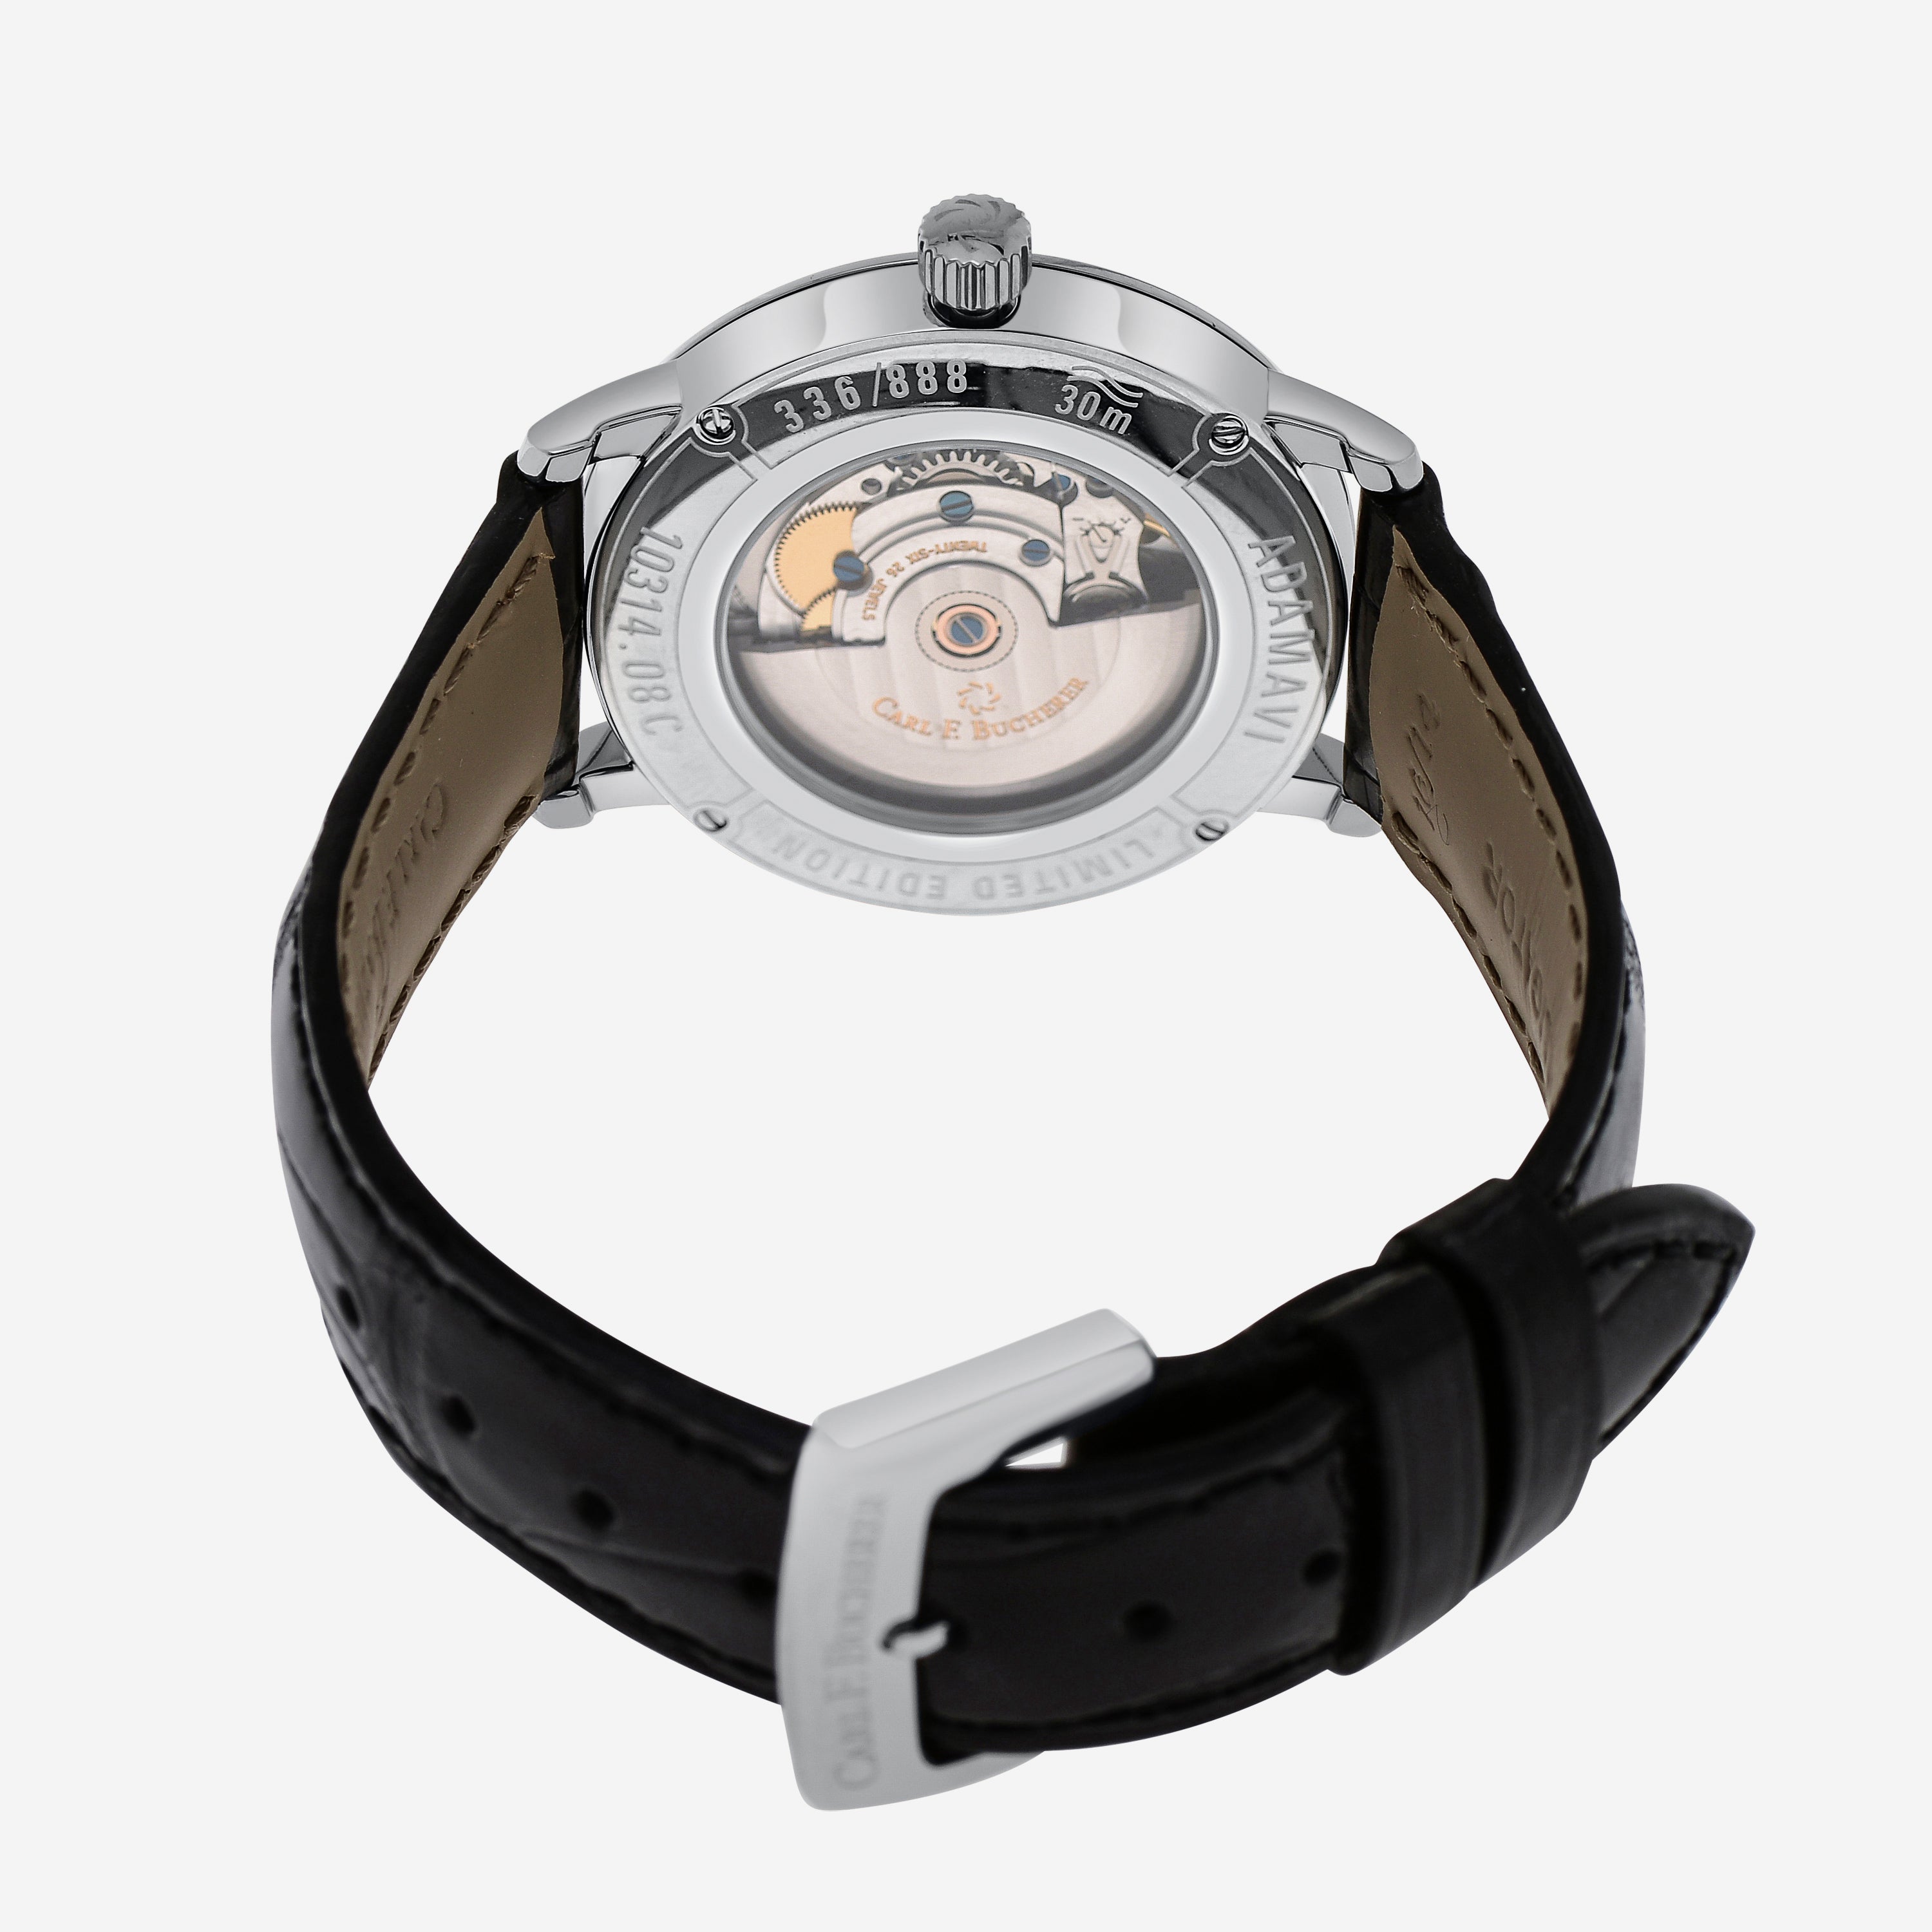 Carl F. Bucherer Adamavi AutoDate Diamond Limited Edition Stainless Steel Automatic Men's Watch 00.10314.08.19.99 - THE SOLIST